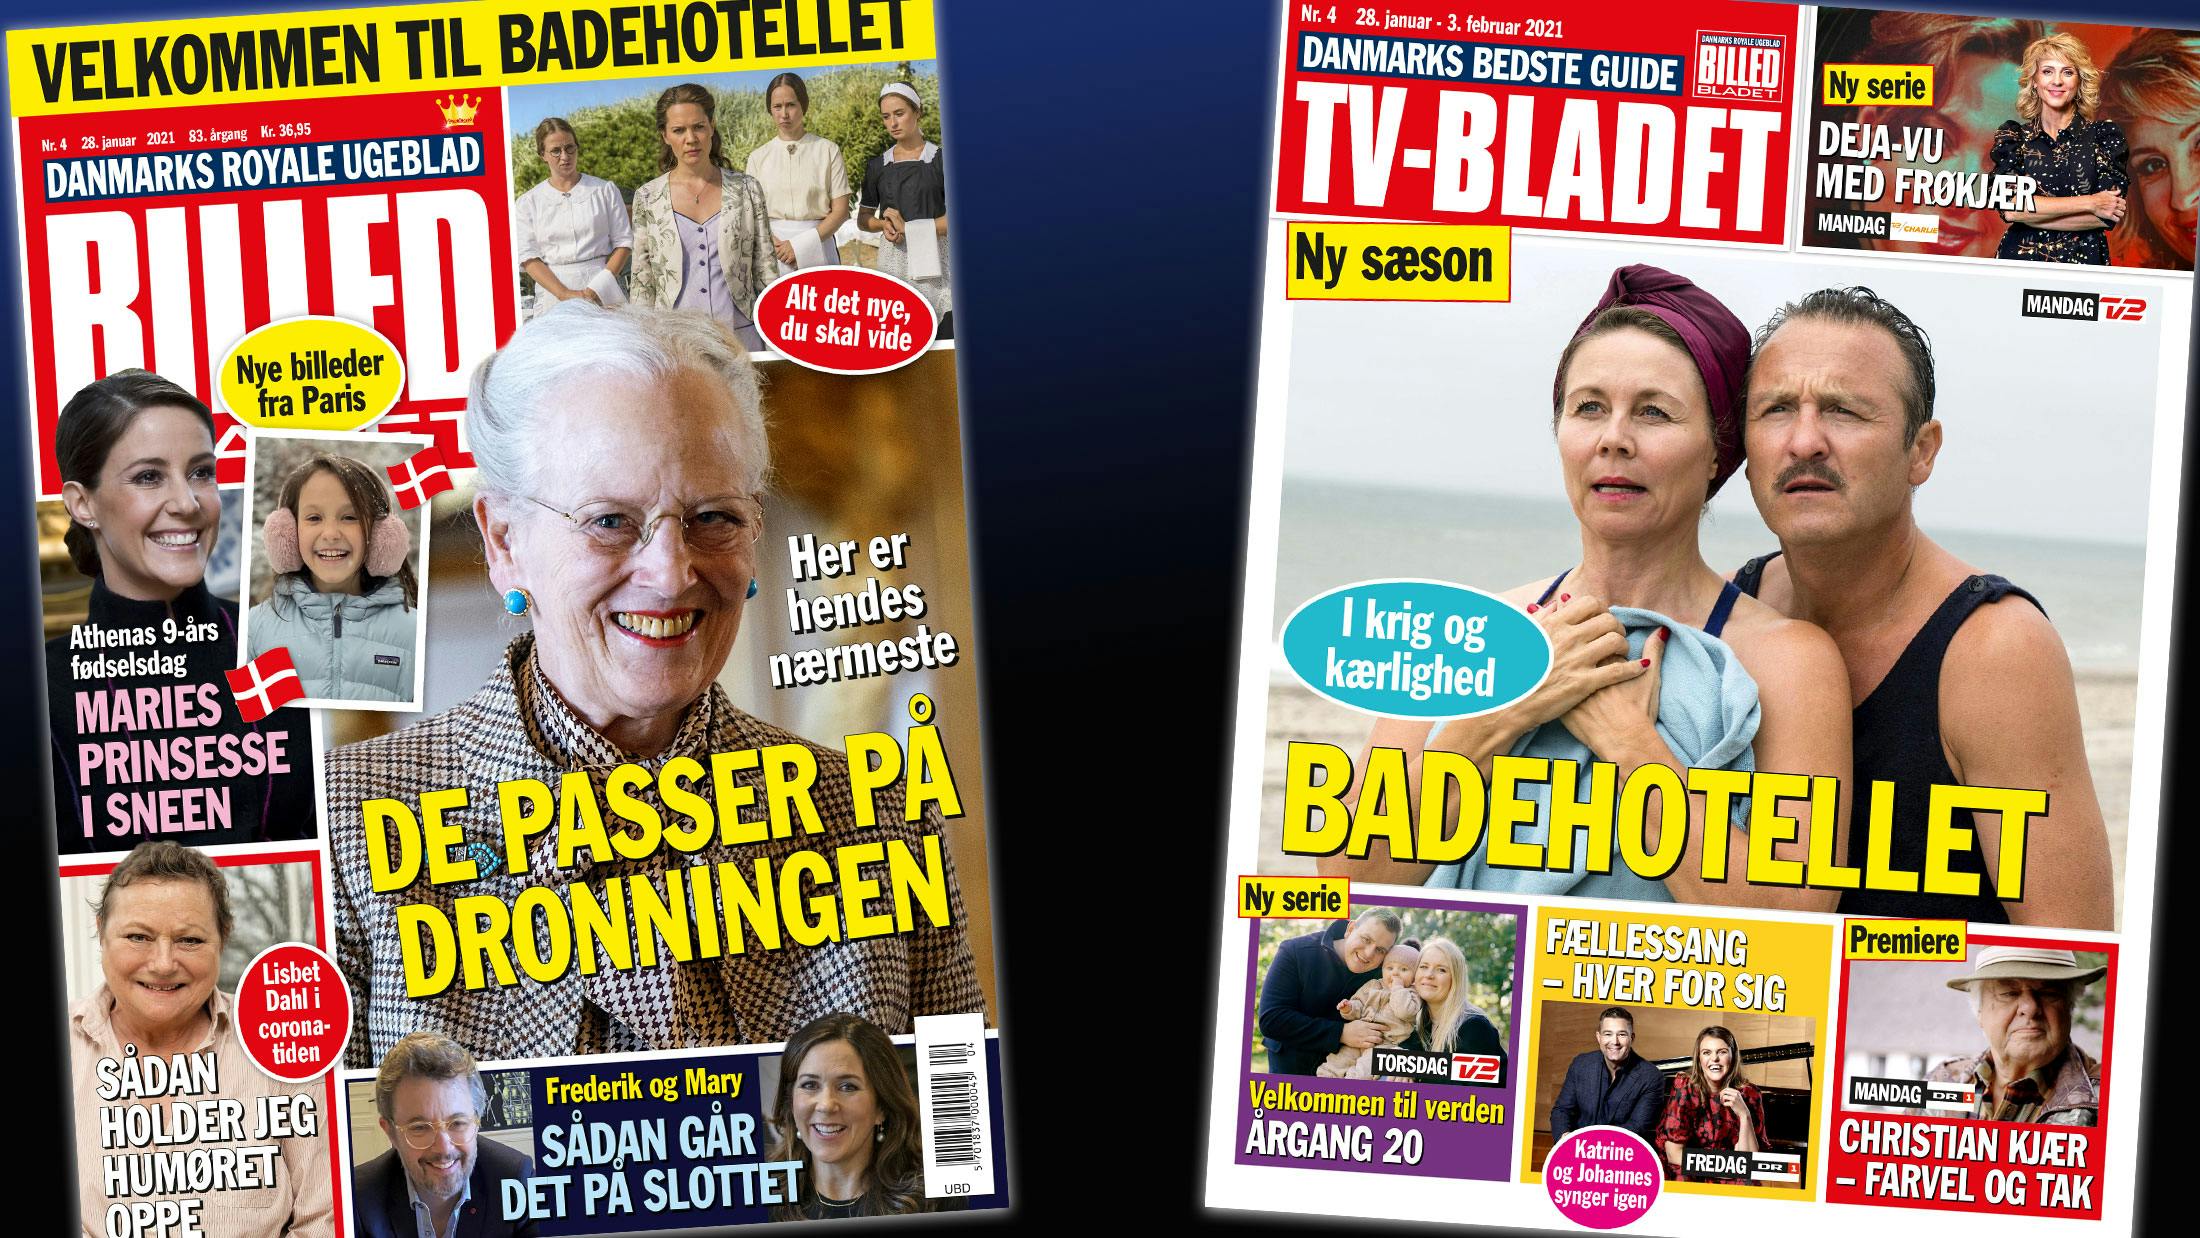 https://imgix.billedbladet.dk/webgrafik_bb04-forsider_4.jpg